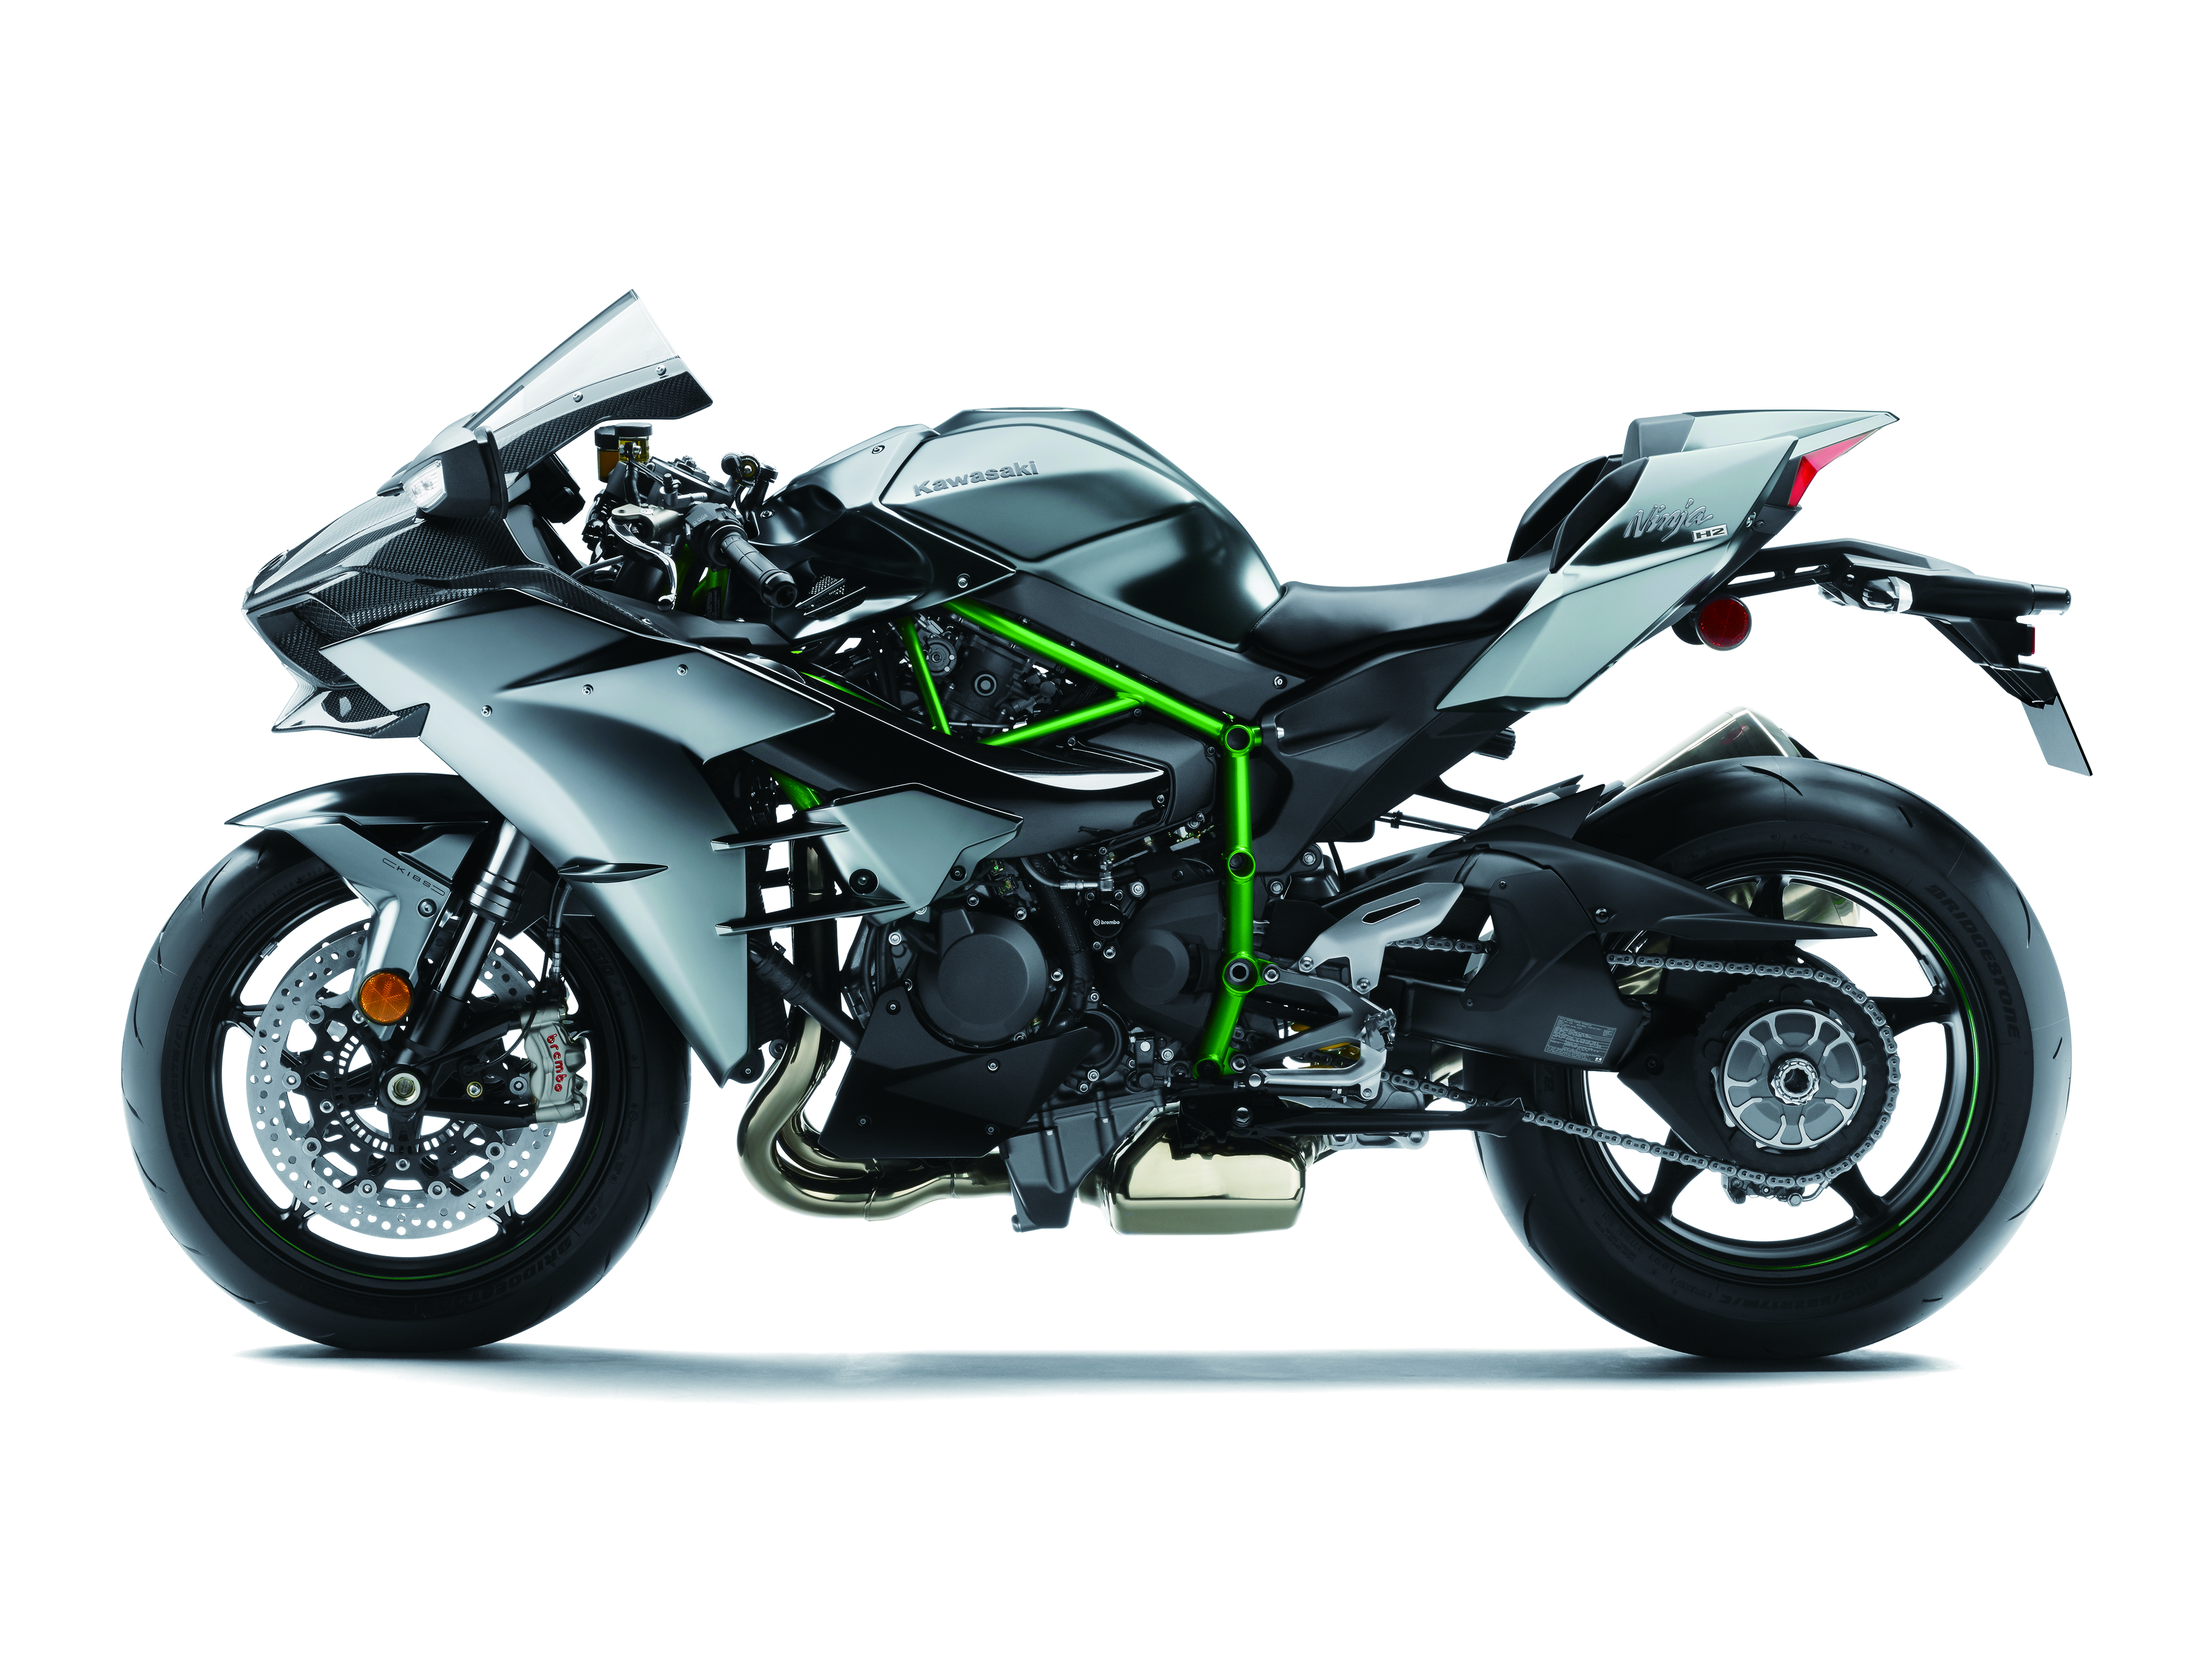 Kawasaki reveals updated Ninja H2 and H2R plus new H2 Carbon